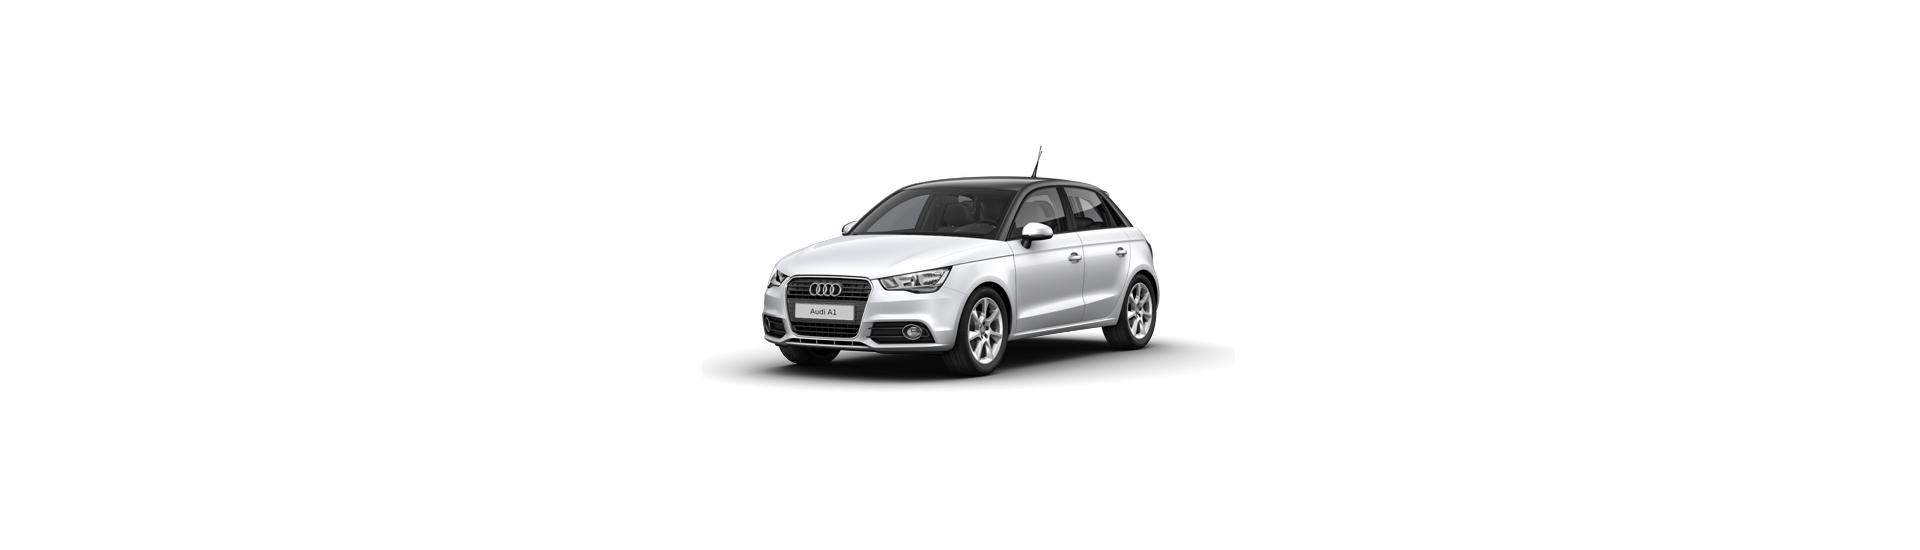 Cauti navigatie dedicata Audi A1 fabricat dupa 2010? Vezi oferta noastra!